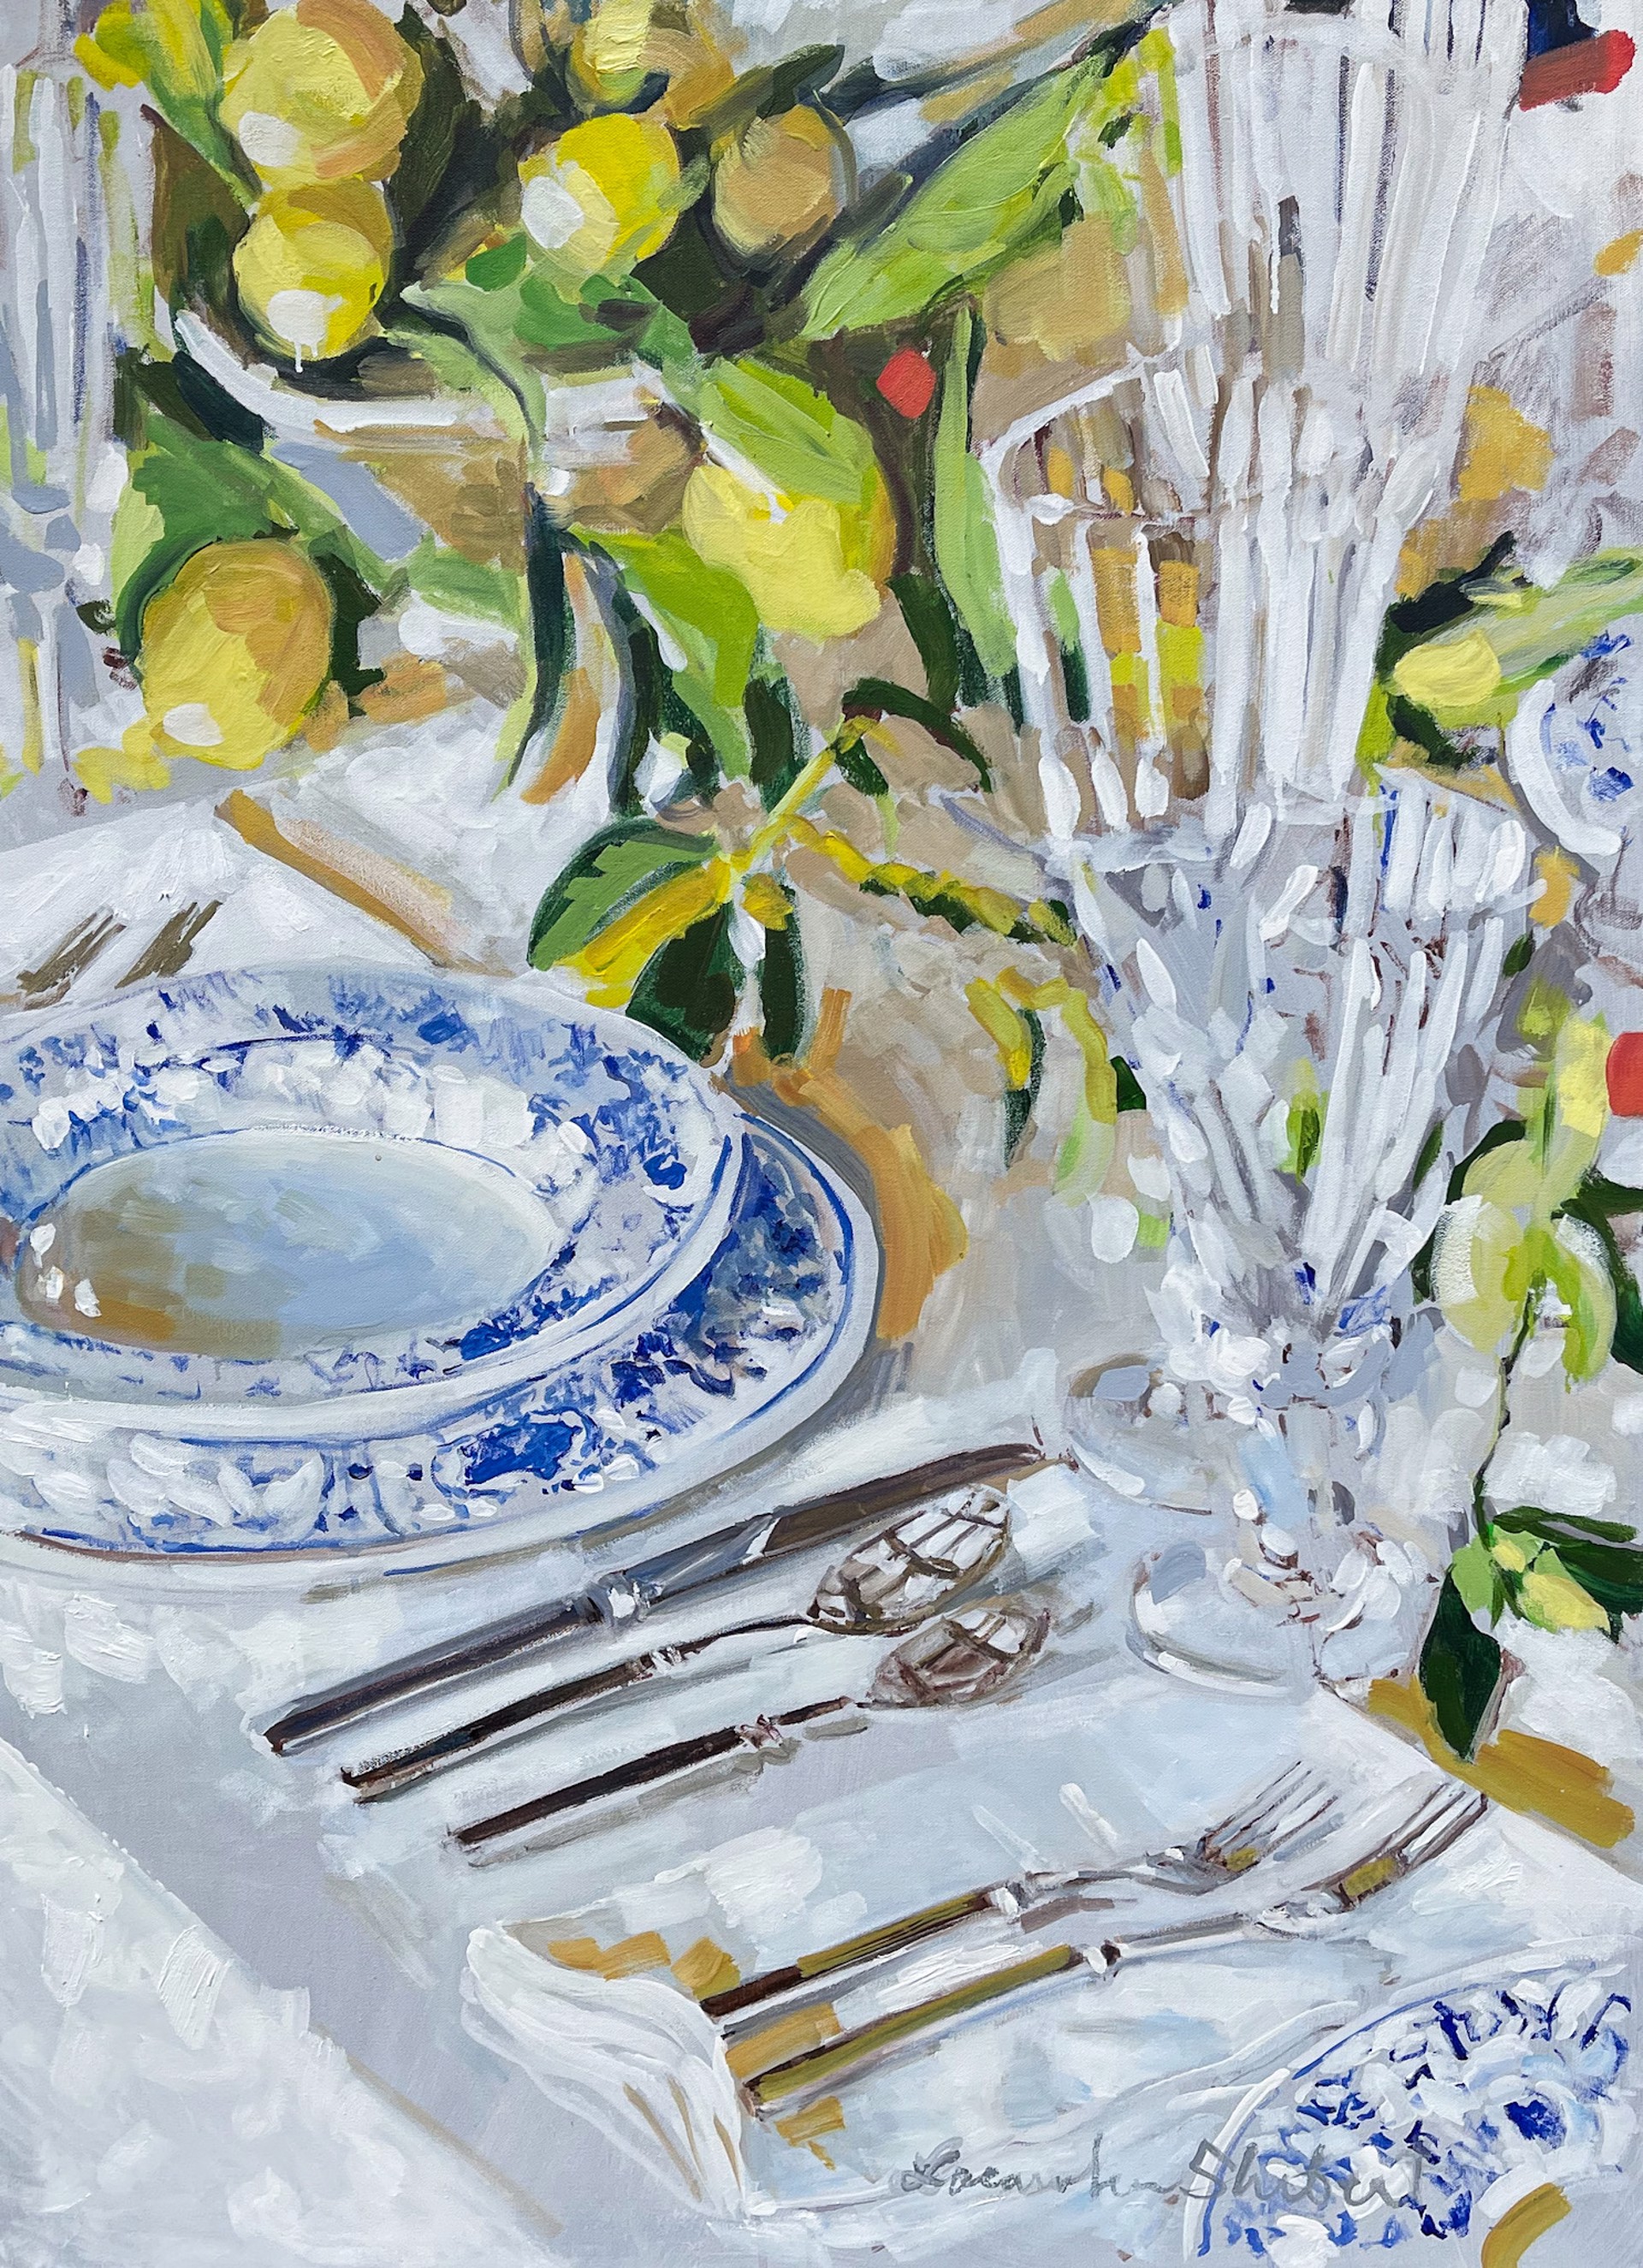 Fine China and Lemons by Laura Lacambra Shubert